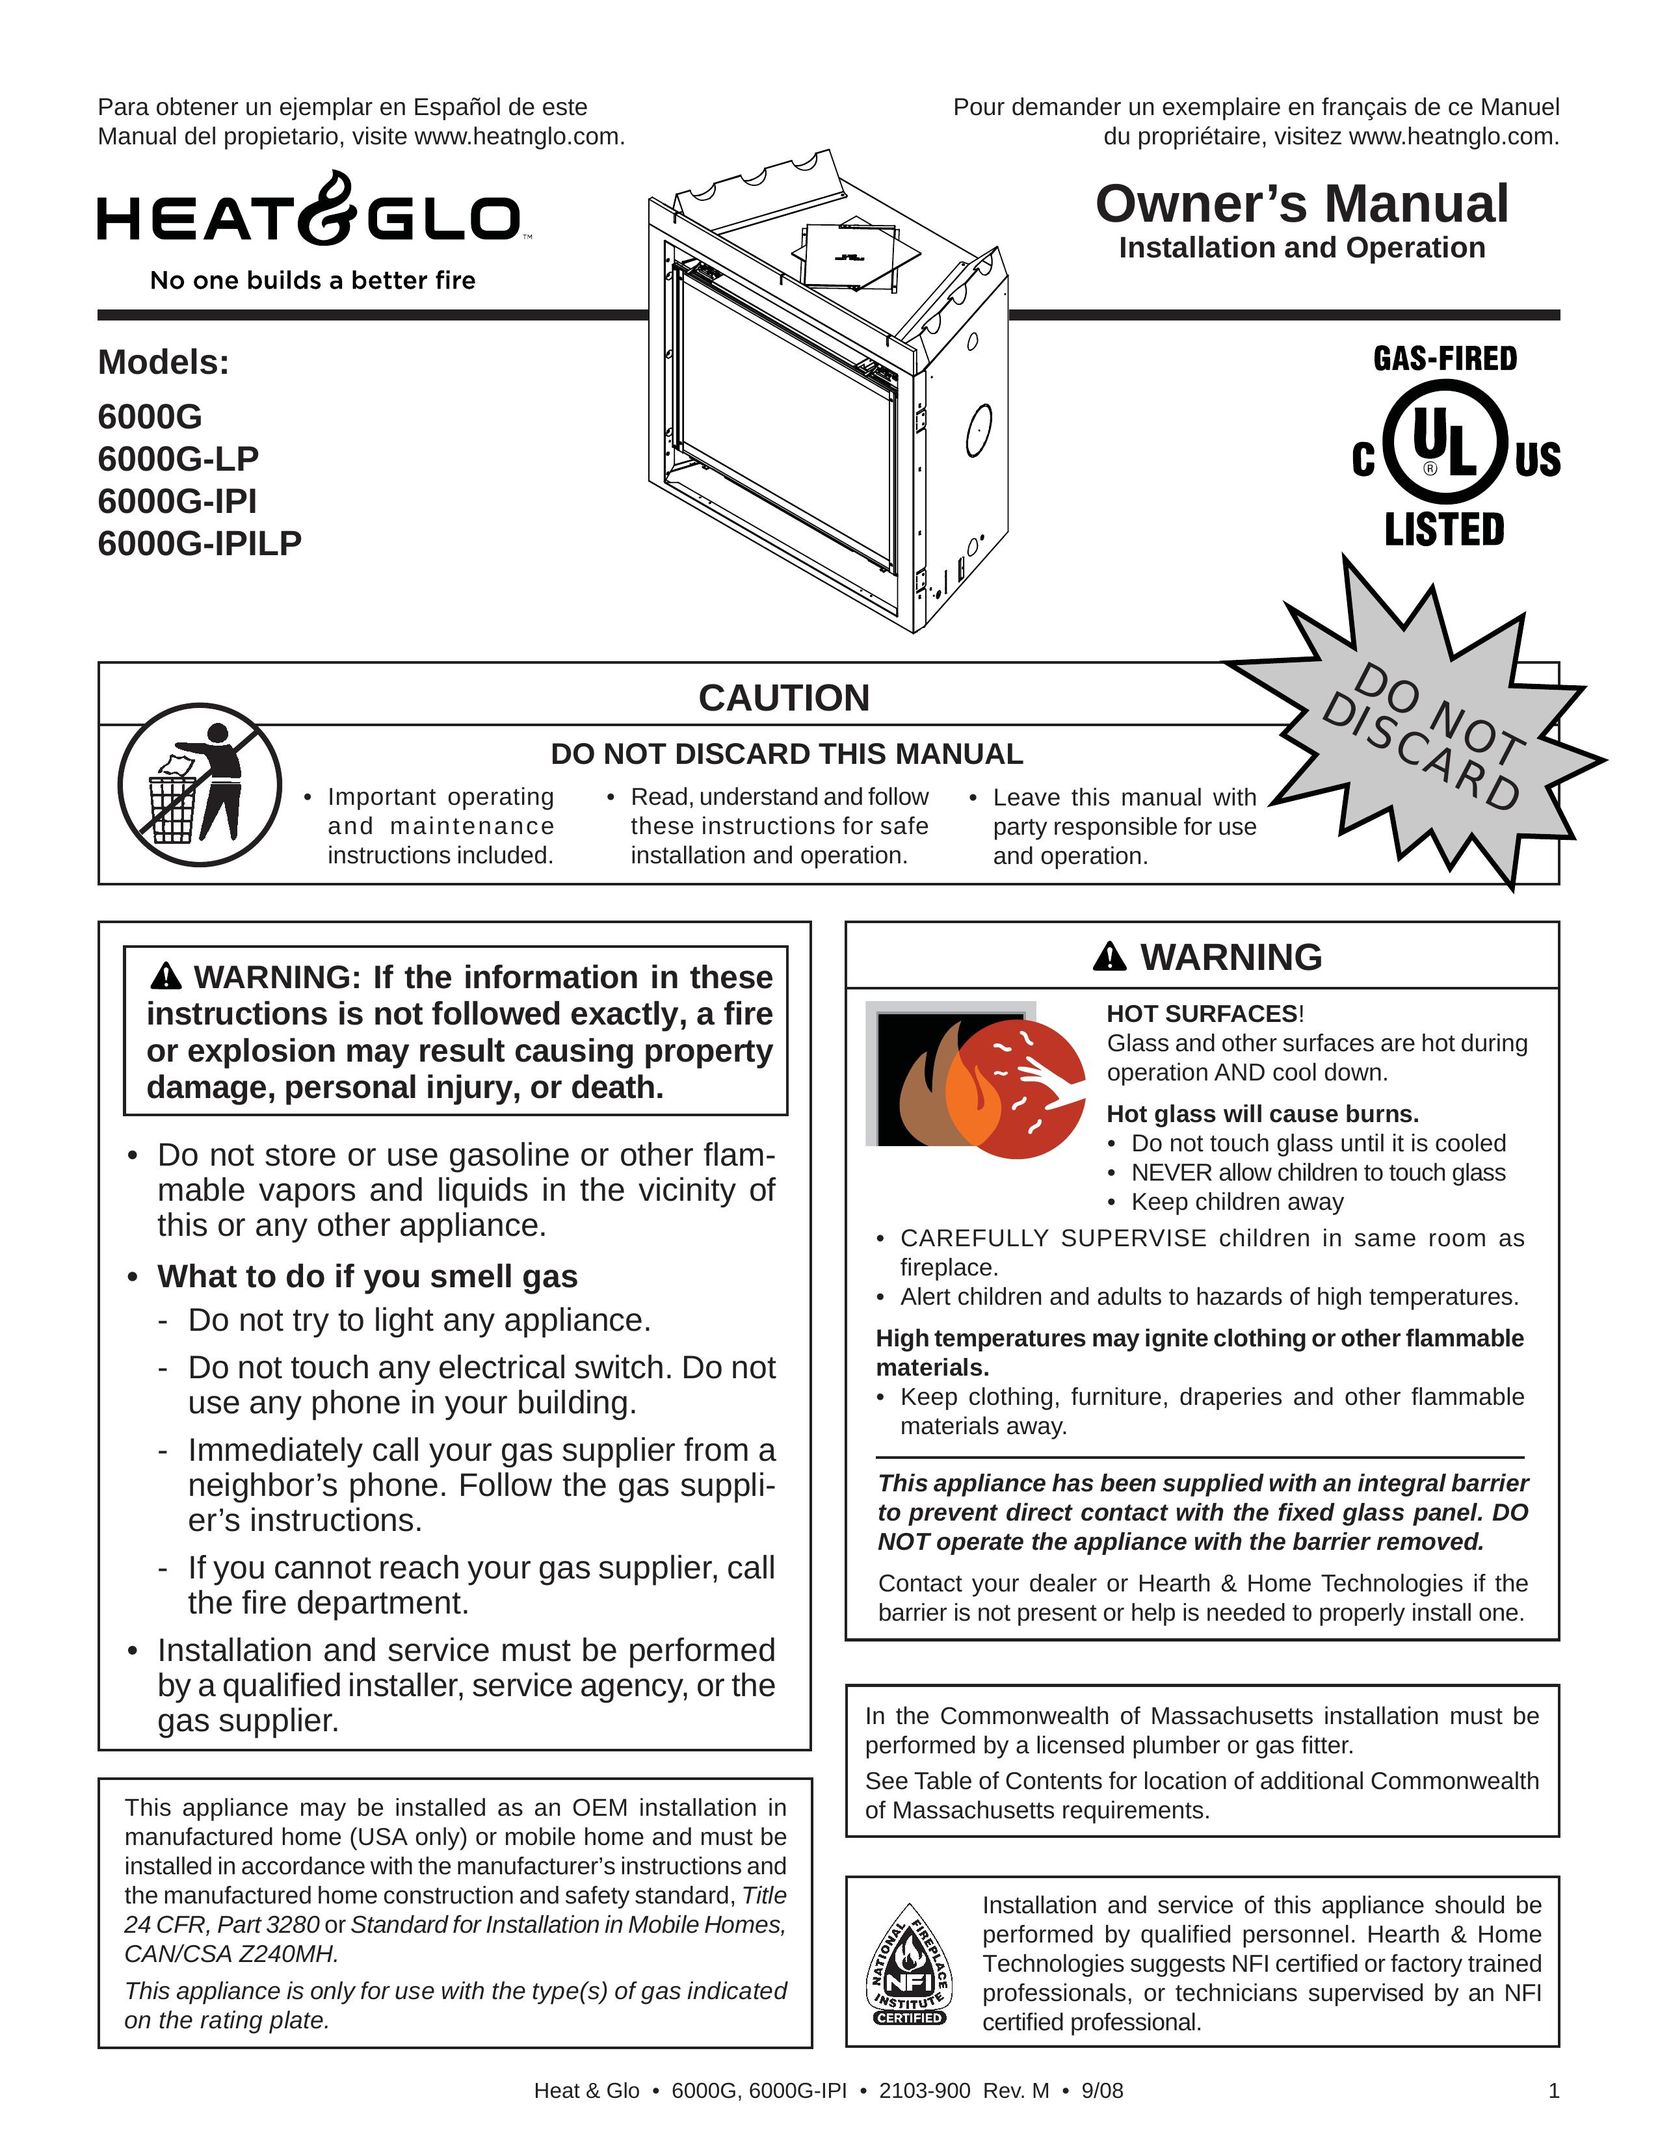 Heat & Glo LifeStyle 6000G-IPILP Air Conditioner User Manual